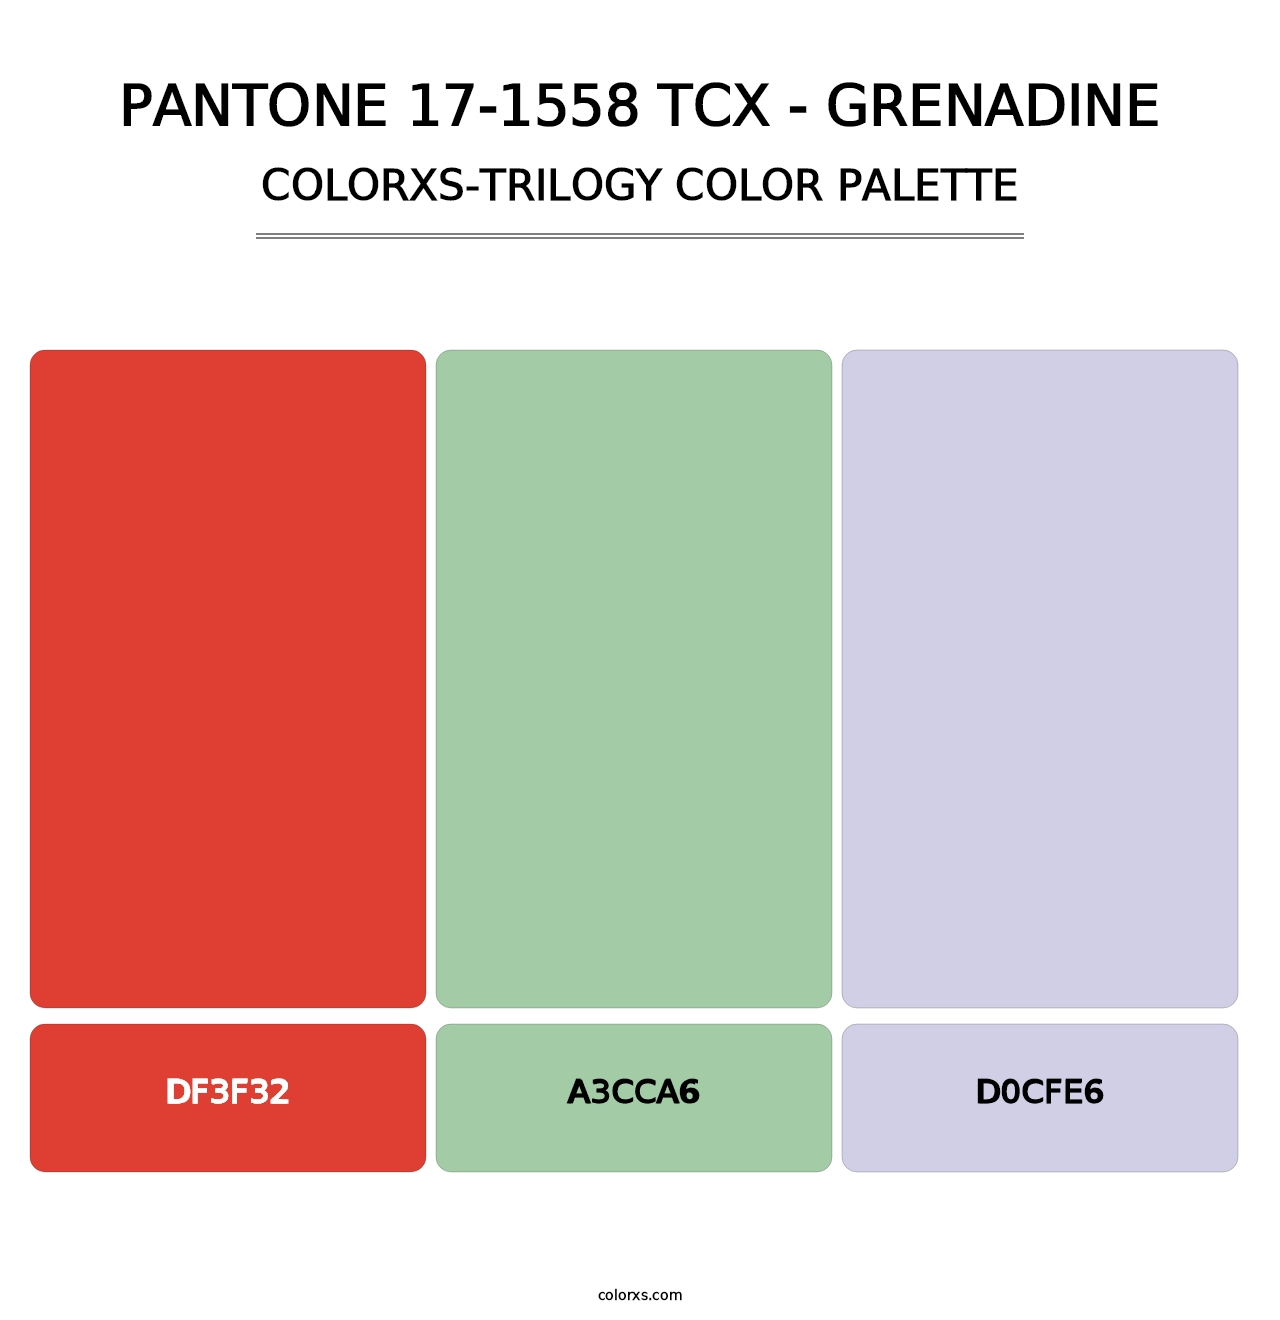 PANTONE 17-1558 TCX - Grenadine - Colorxs Trilogy Palette